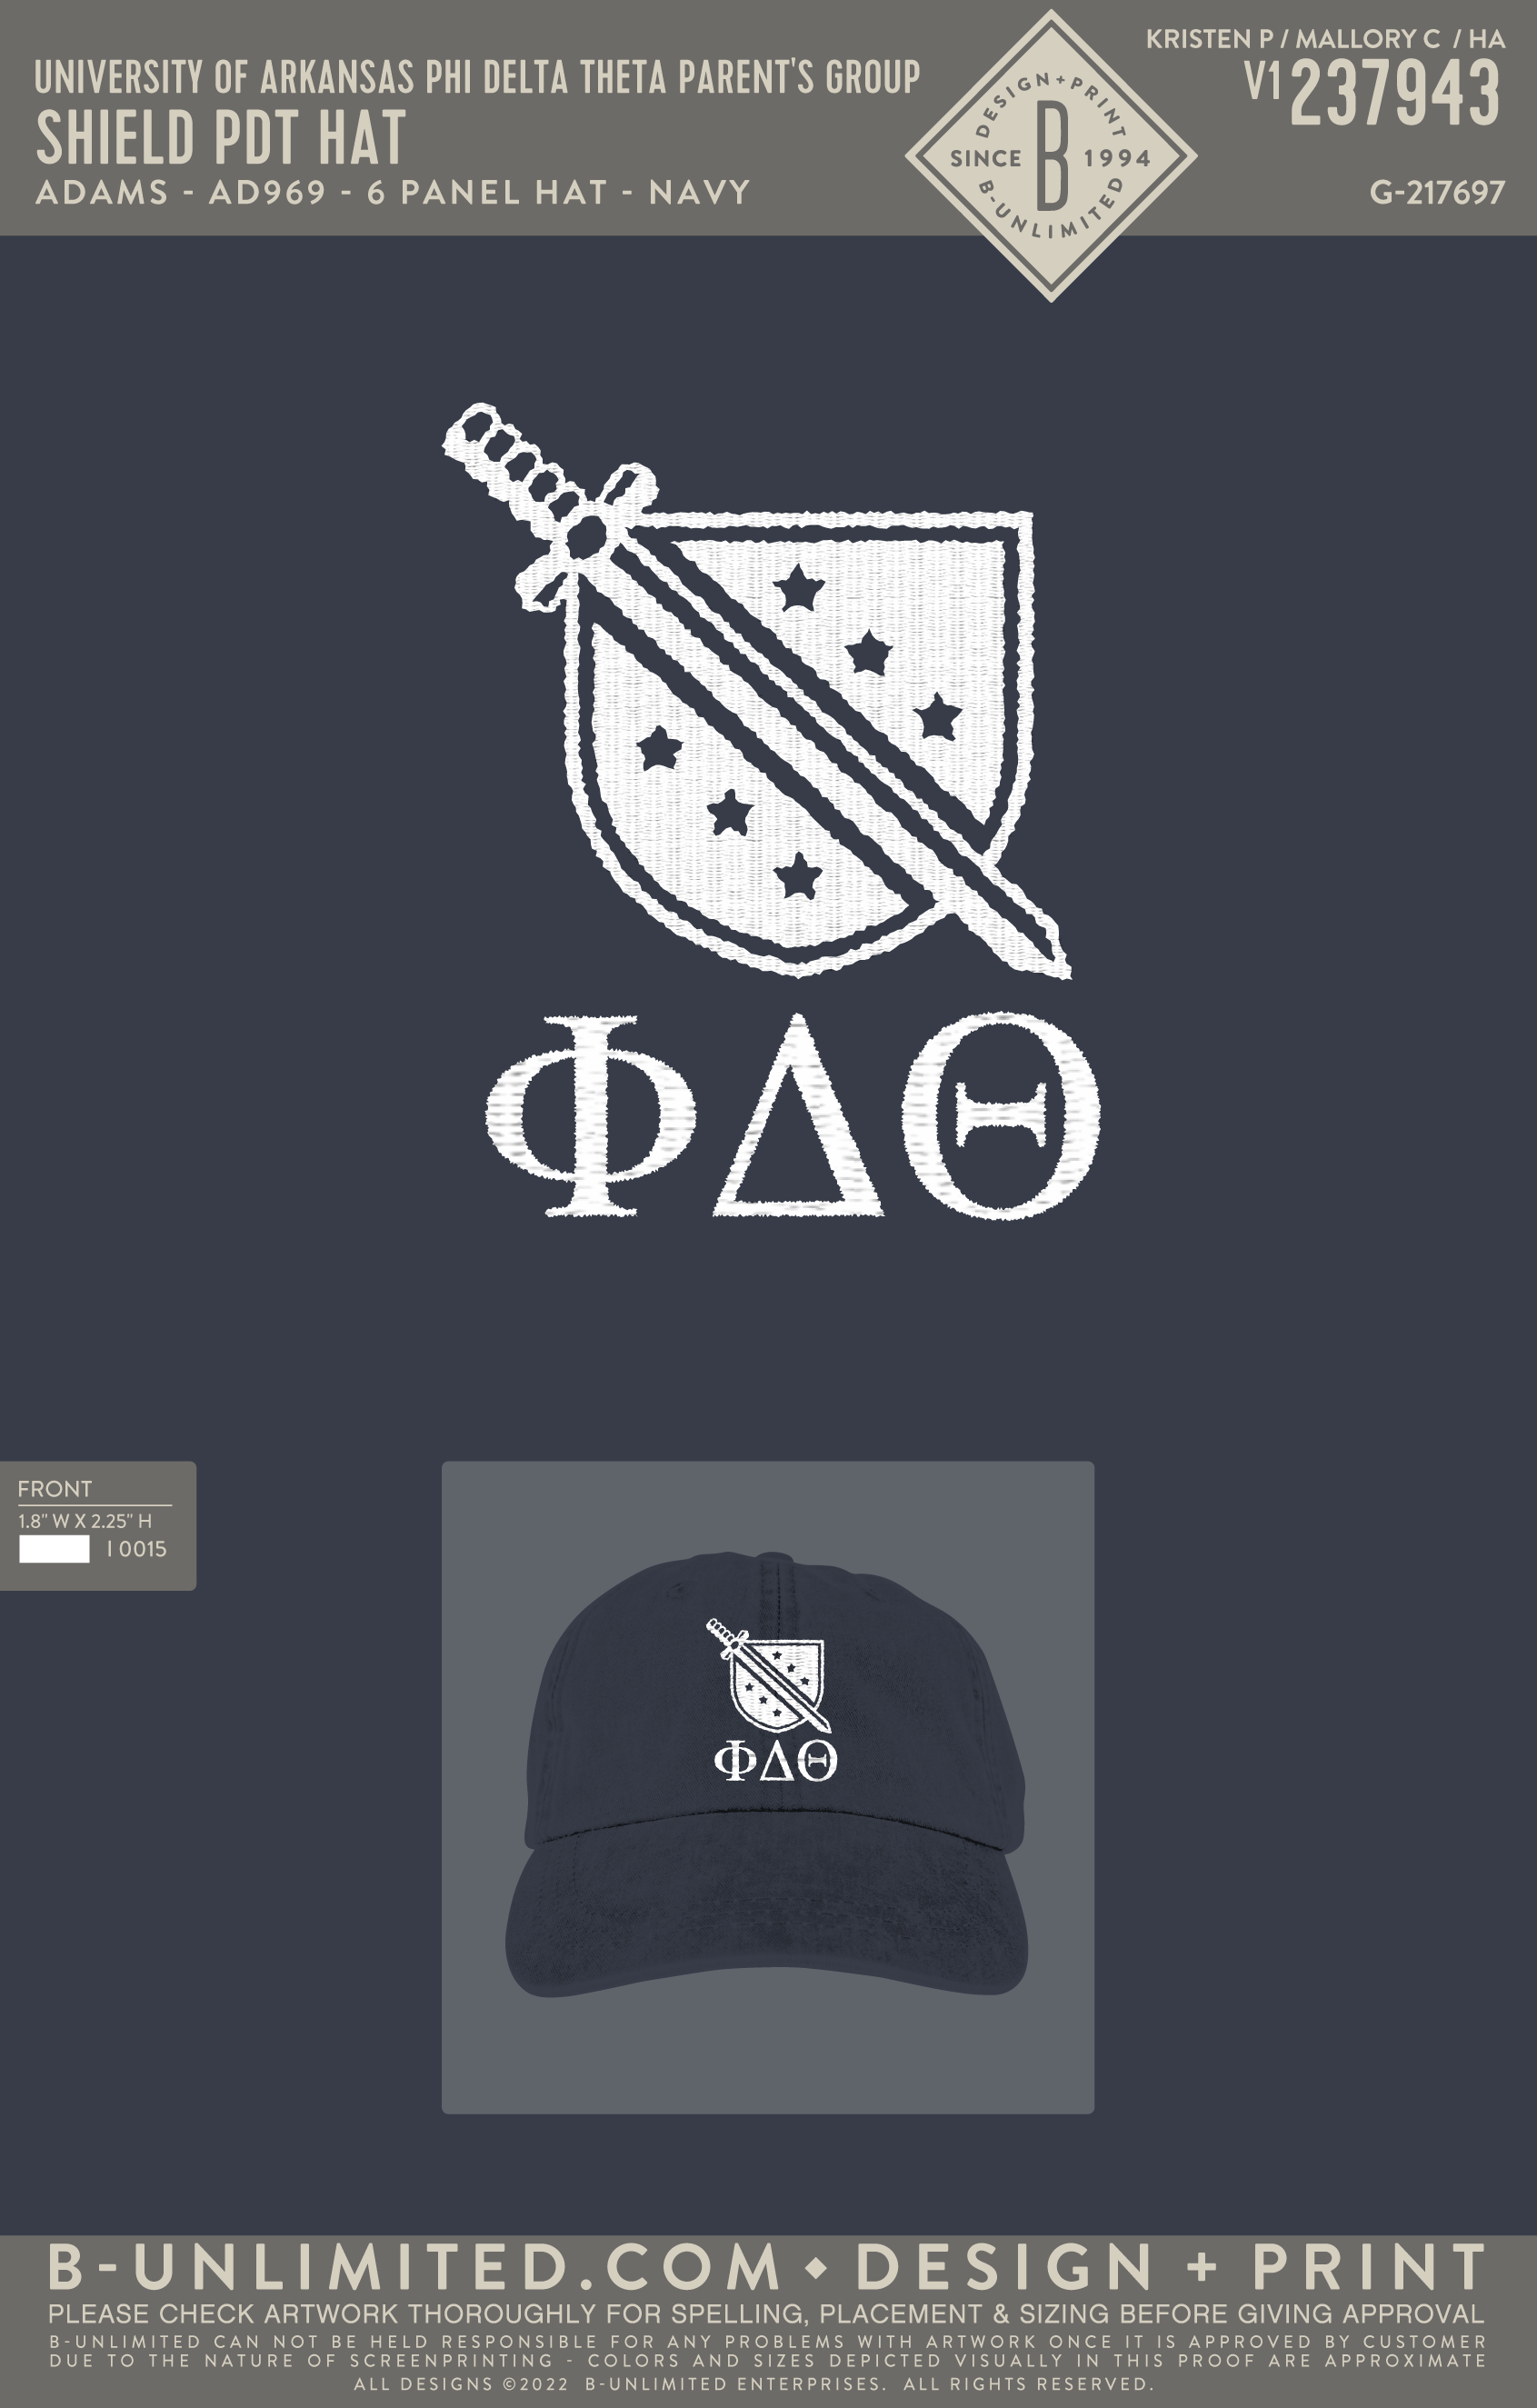 University of Arkansas Phi Delta Theta Parent's Group - Shield PDT Hat - Adams - AD969 - Hat - Navy